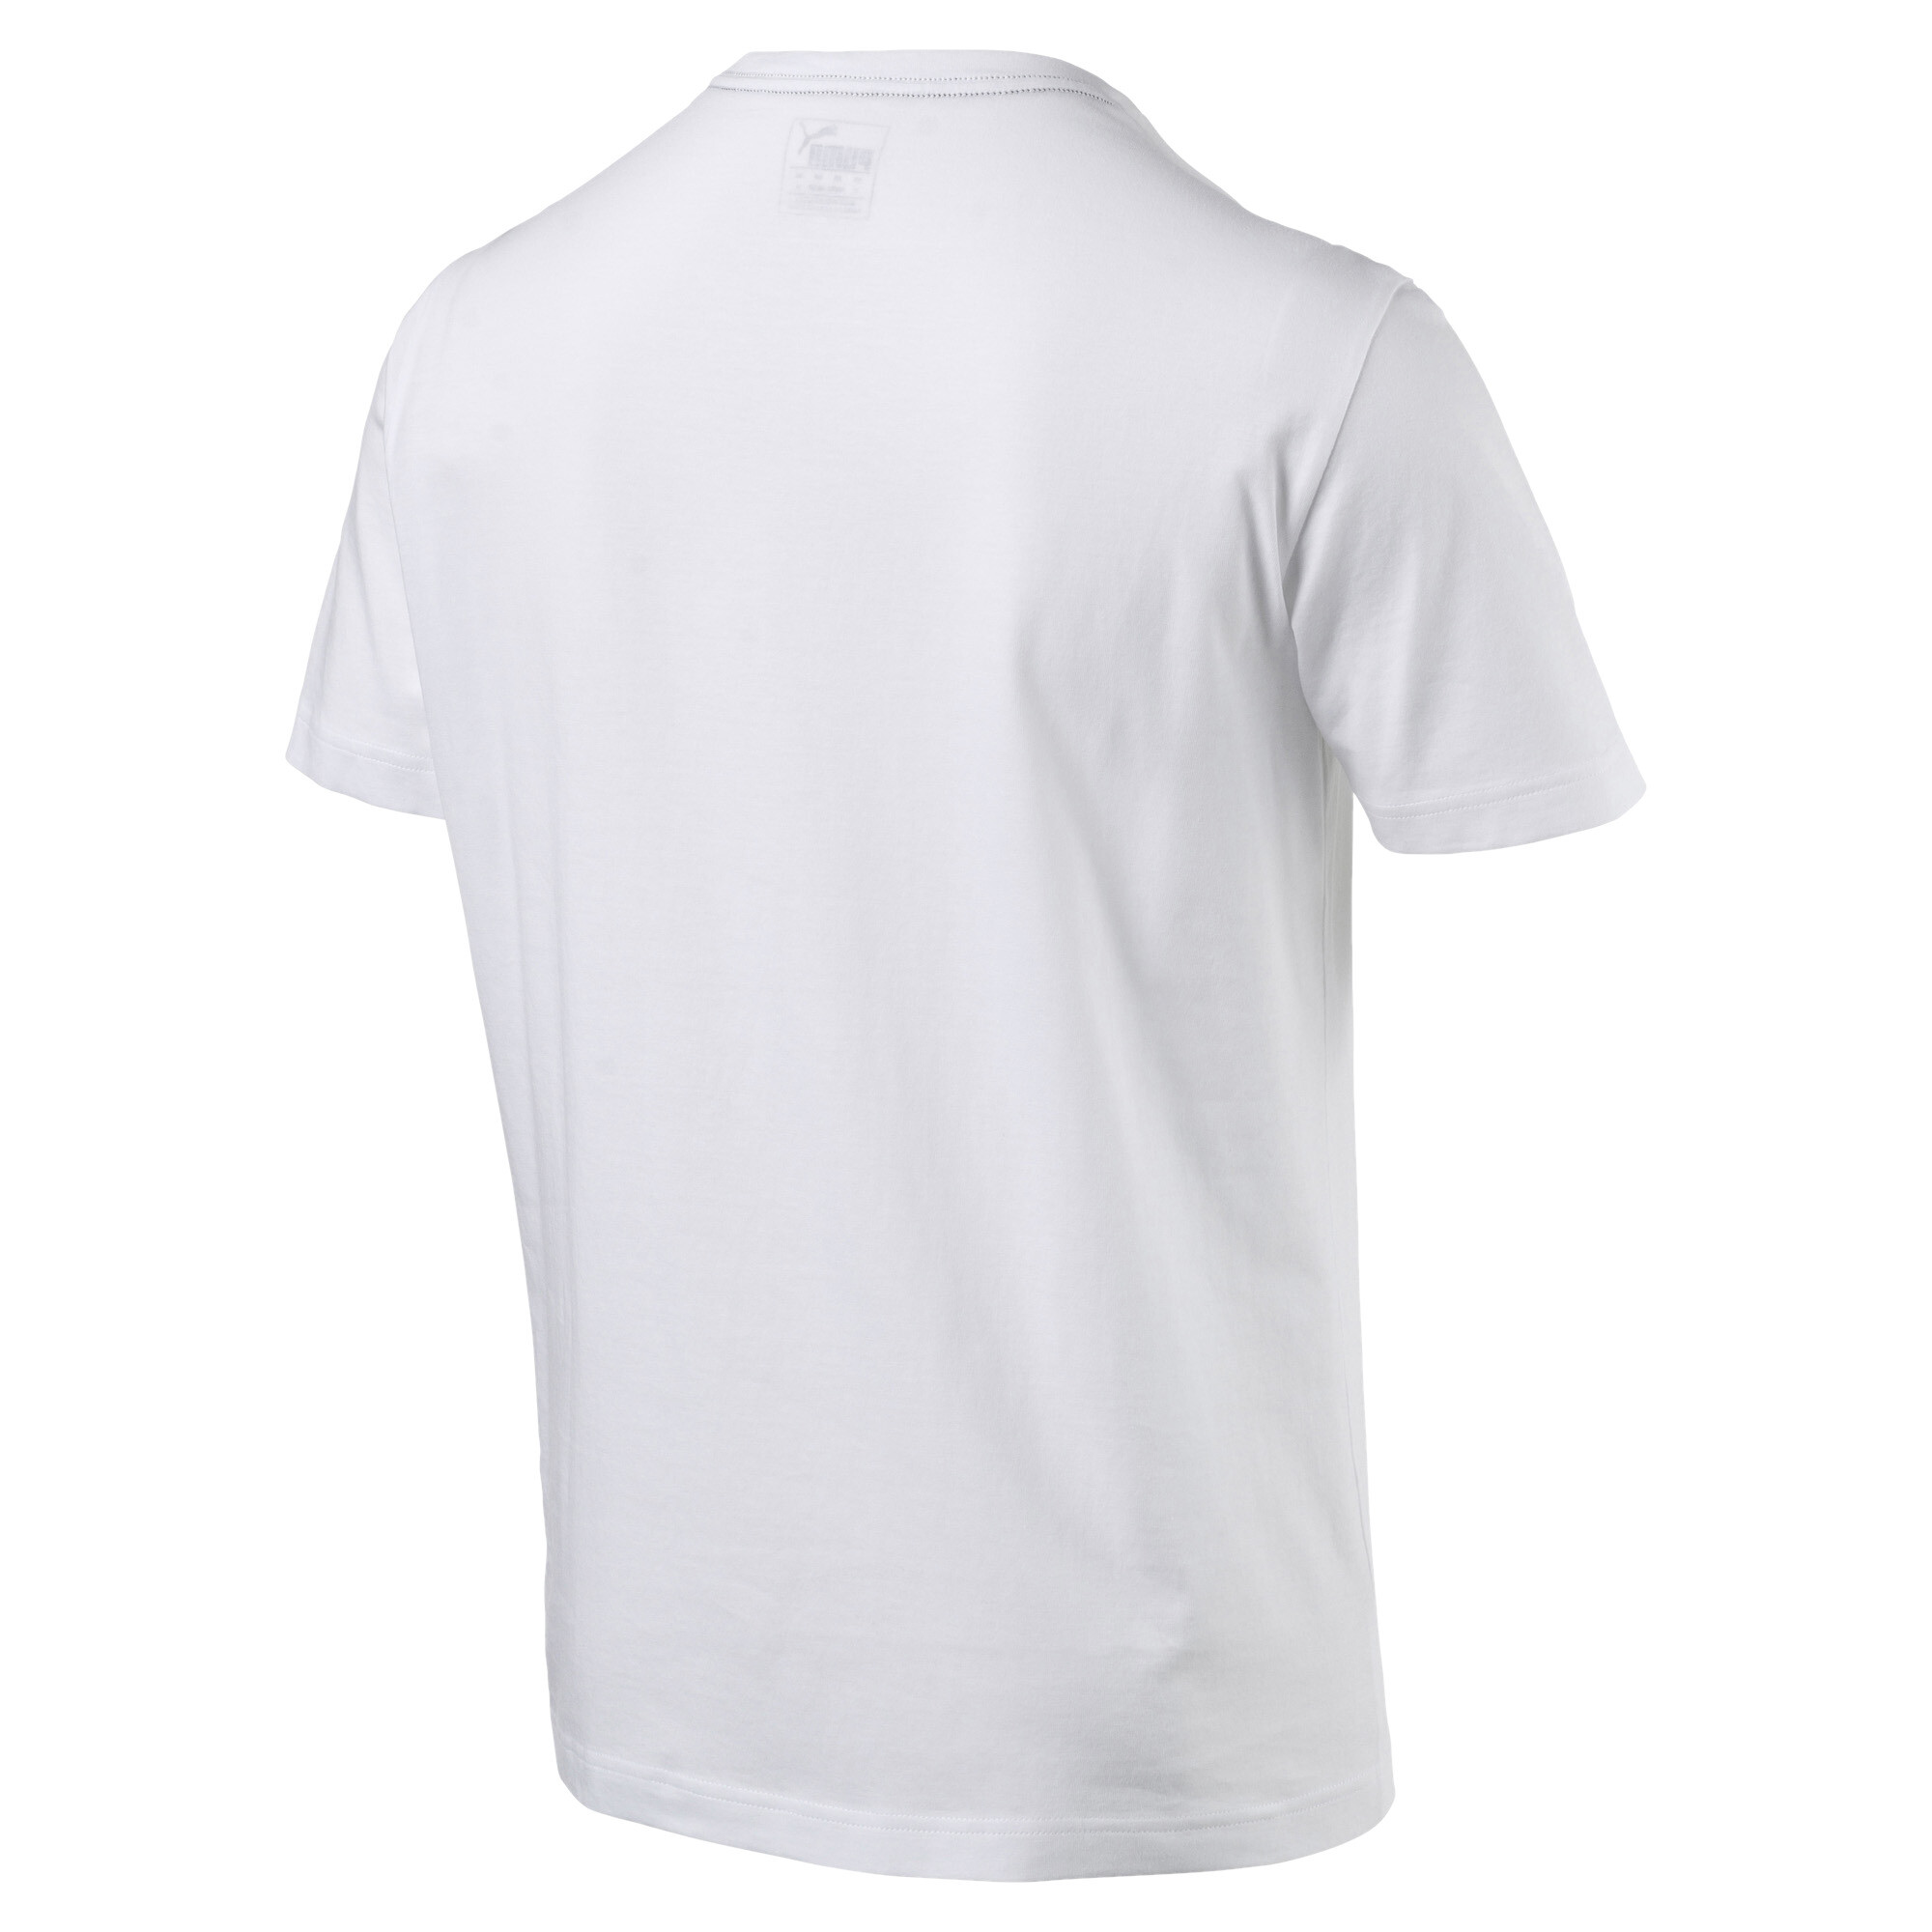 PUMA Iconic V-Neck T-Shirt Men Tee Basics | eBay